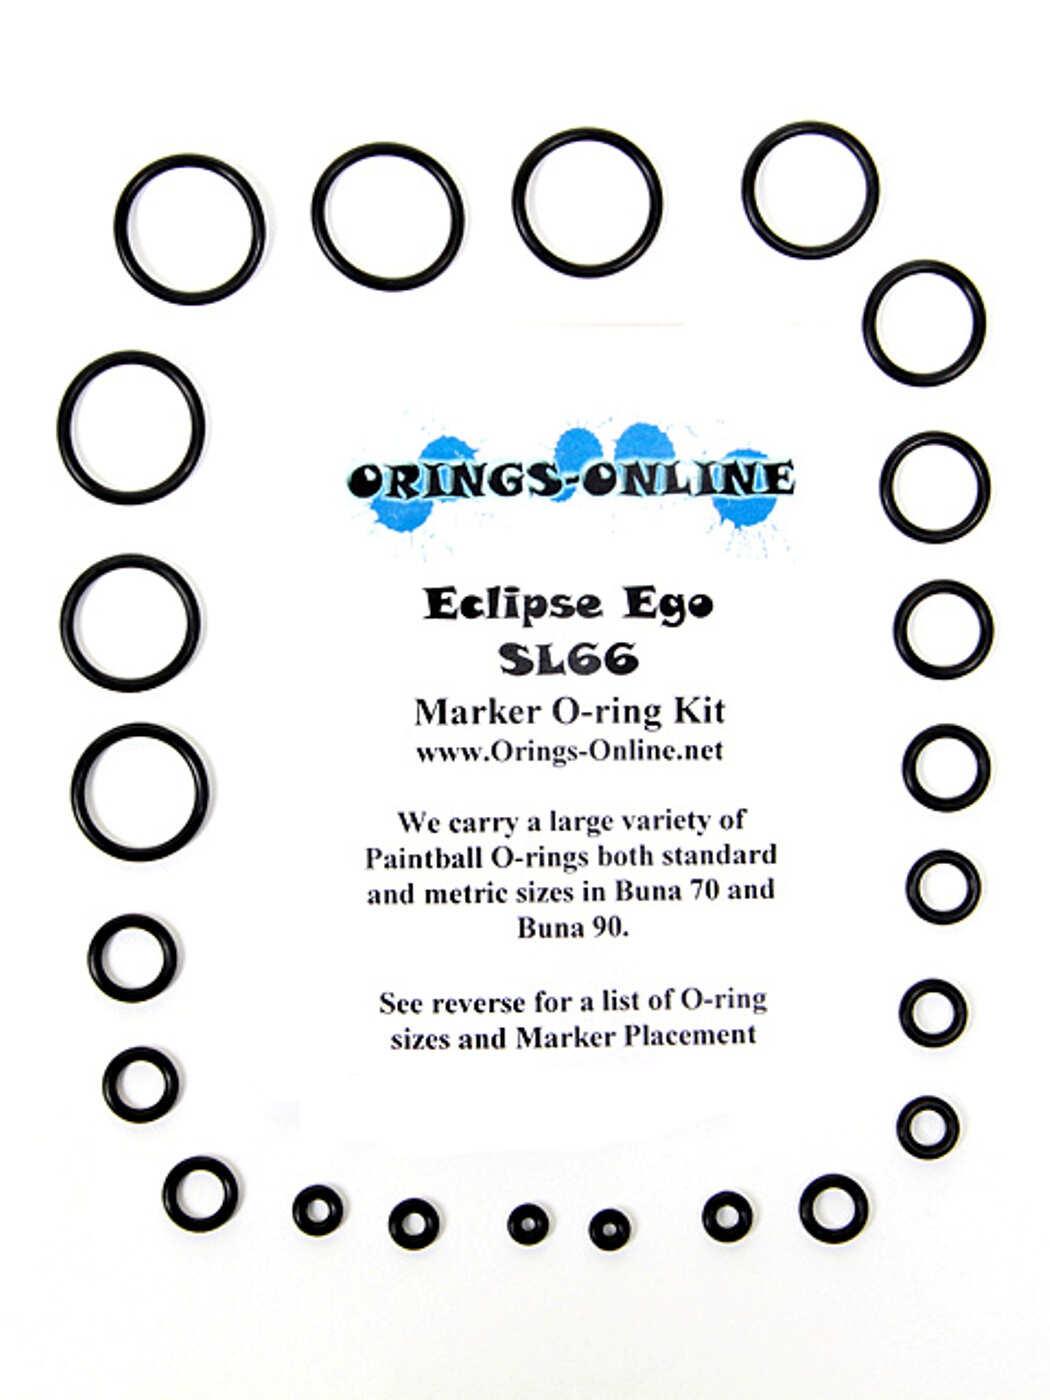 Planet Eclipse Ego SL66 Marker O-ring Kit